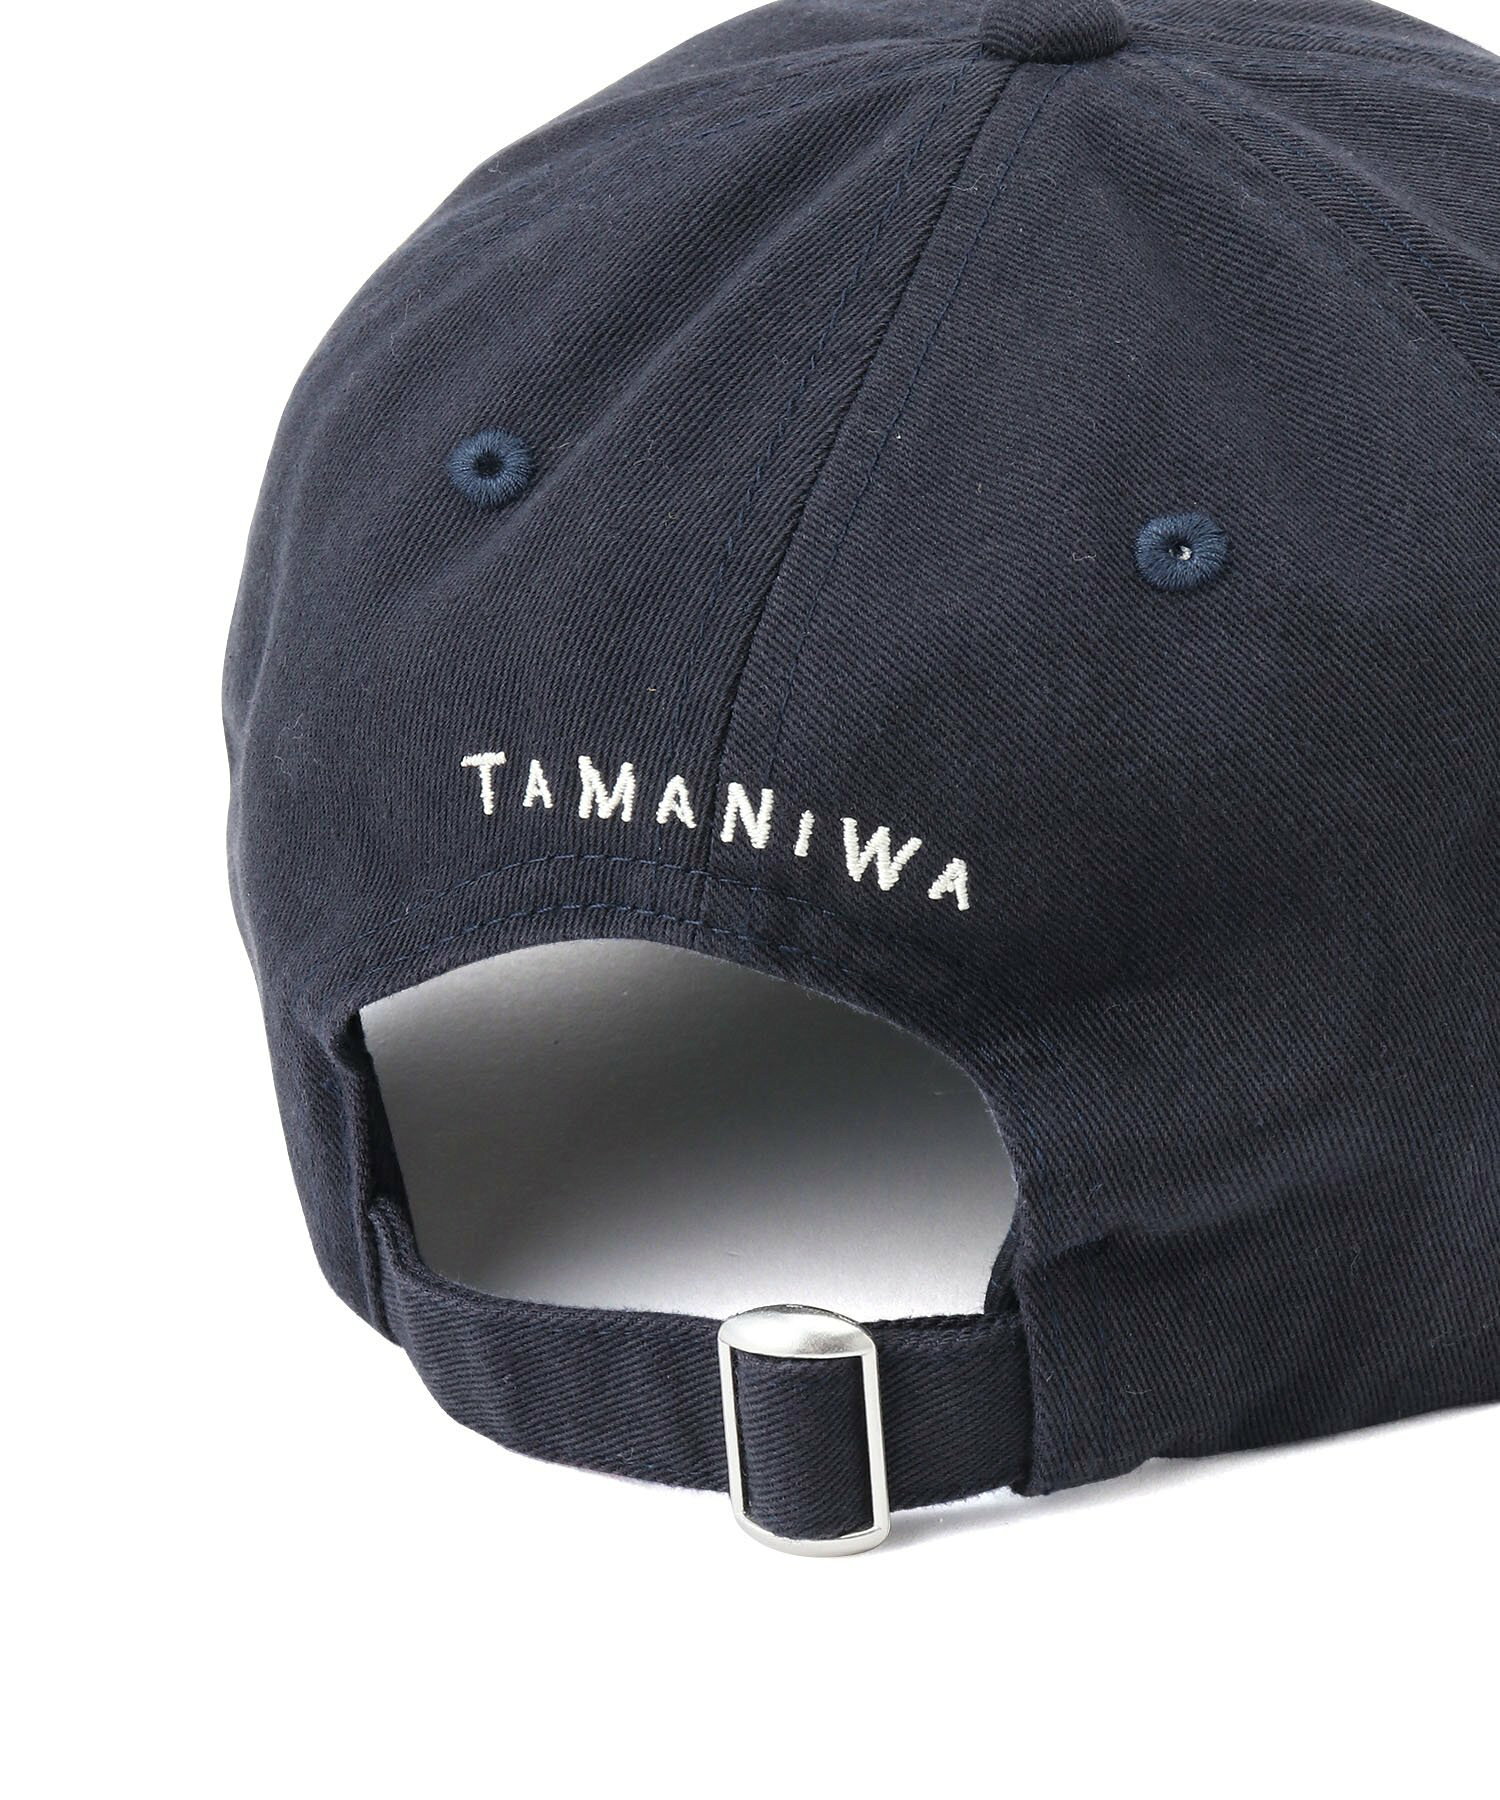 【 TAMANIWA*NEGRO LEAGUE 】TWILL OLD CAP